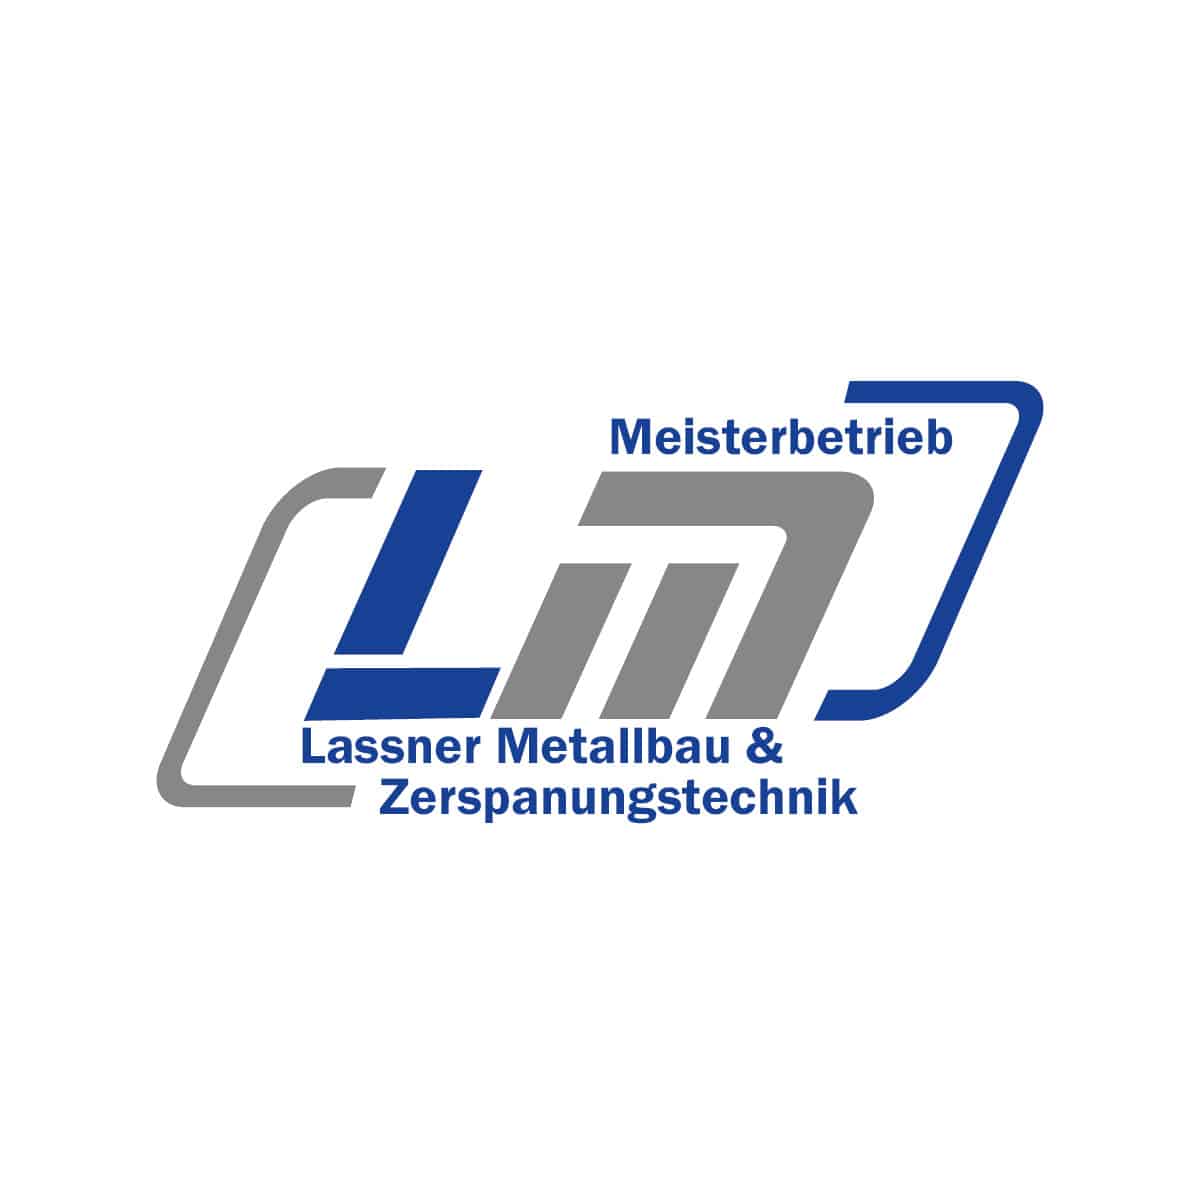 Lassner Metallbau & Zerspanungstechnik GmbH & Co. KG